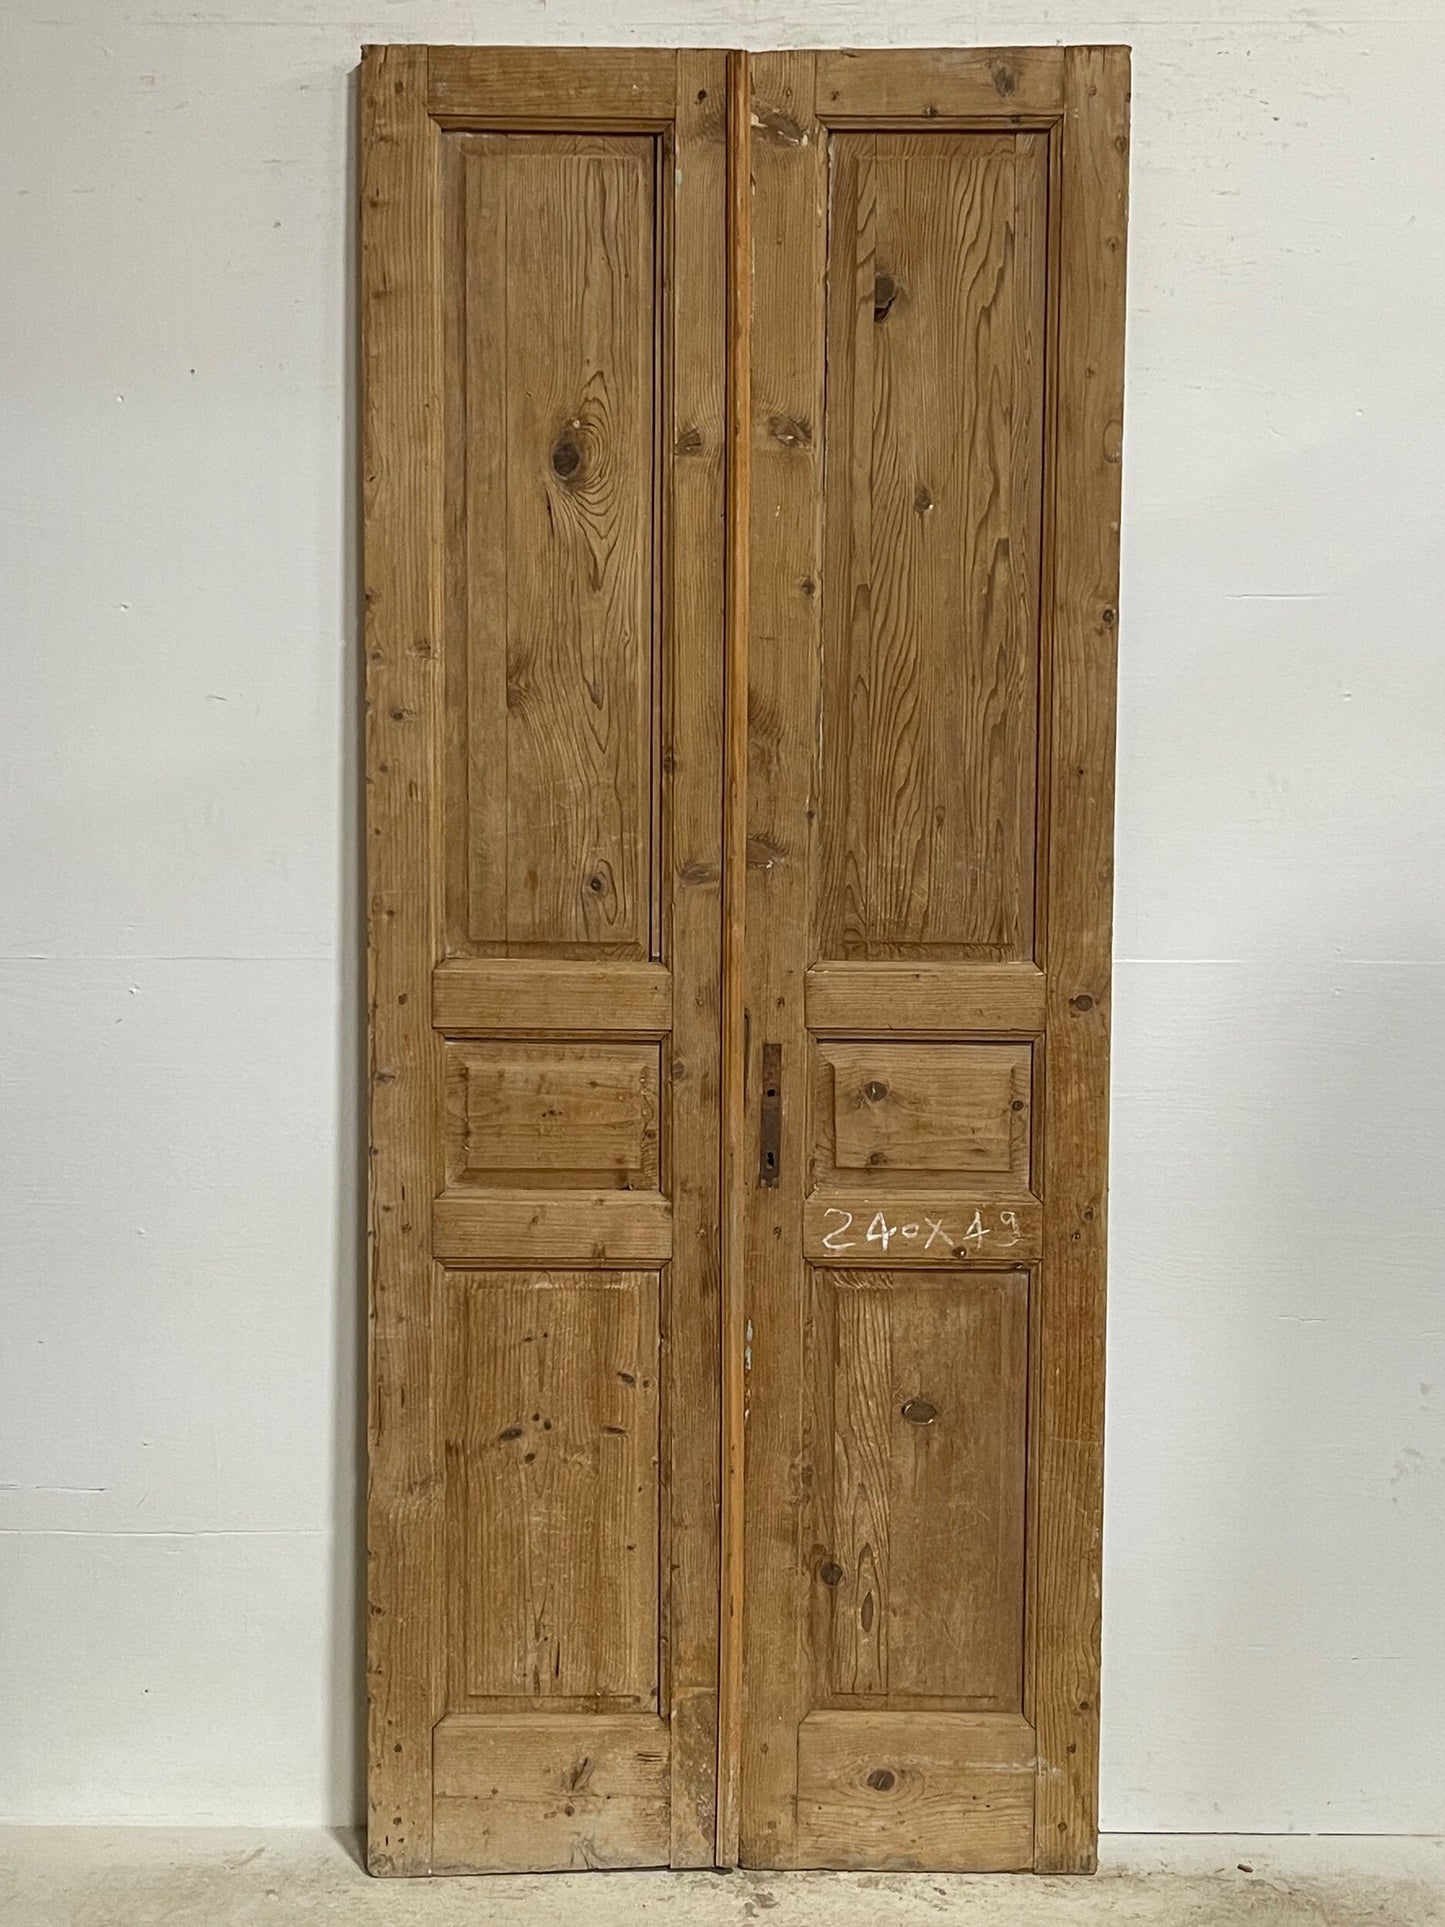 Antique French doors ( 94.5x38.75) H0153s